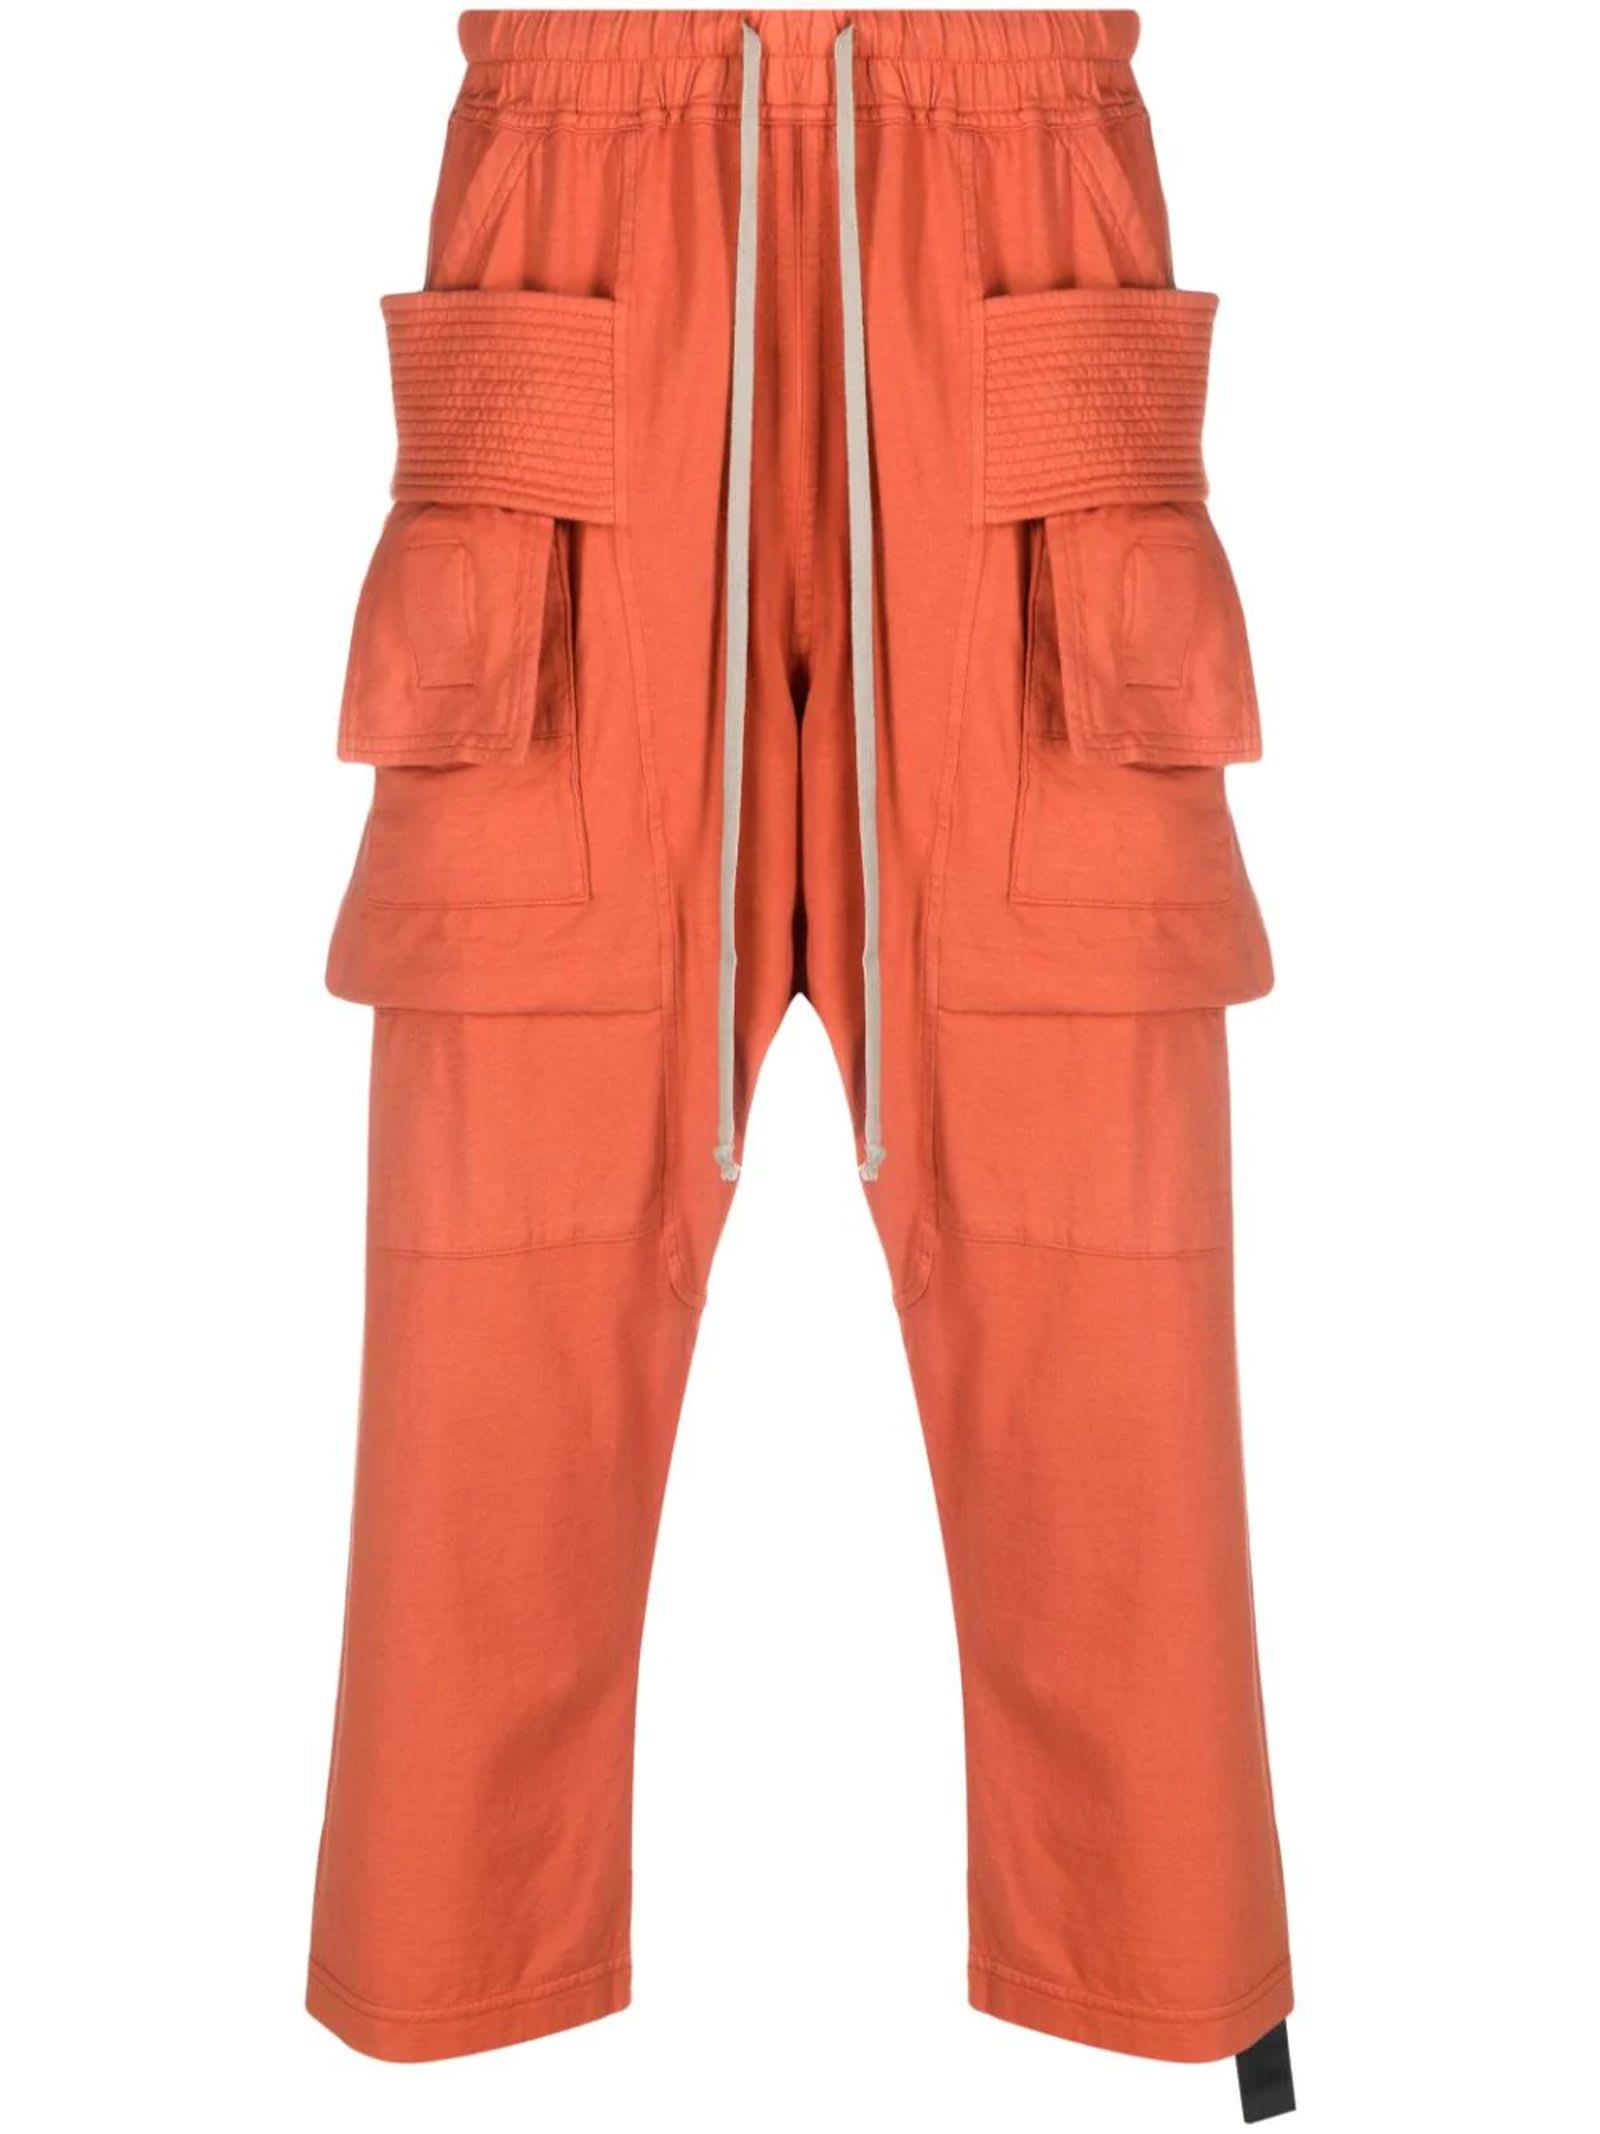 DRKSHDW Orange Cotton Track Pants